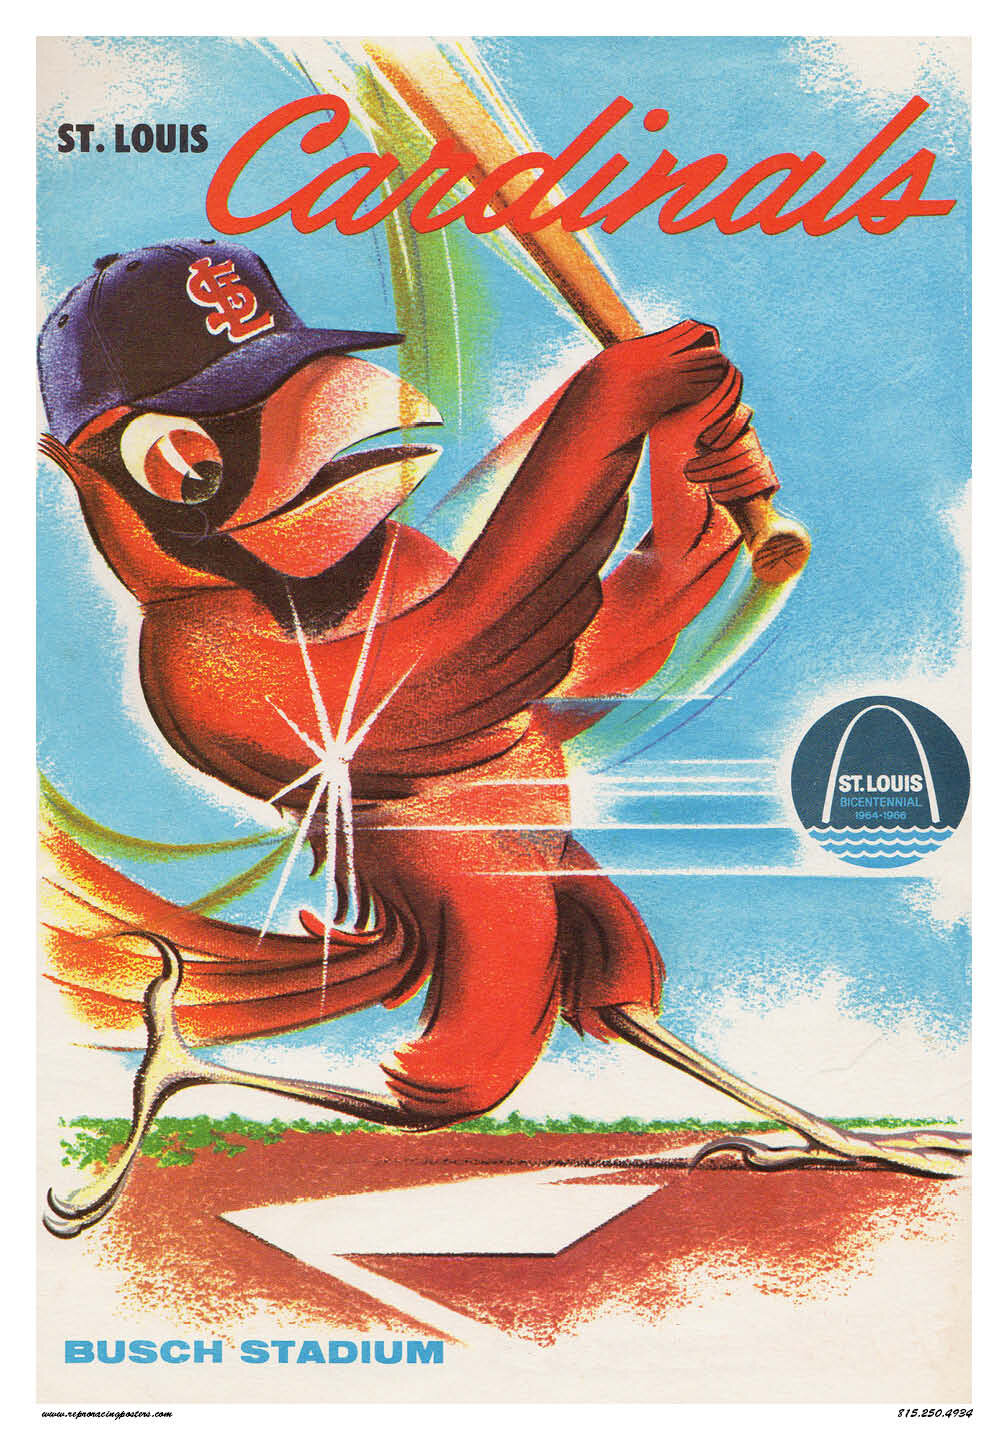 st.louis cardinals poster